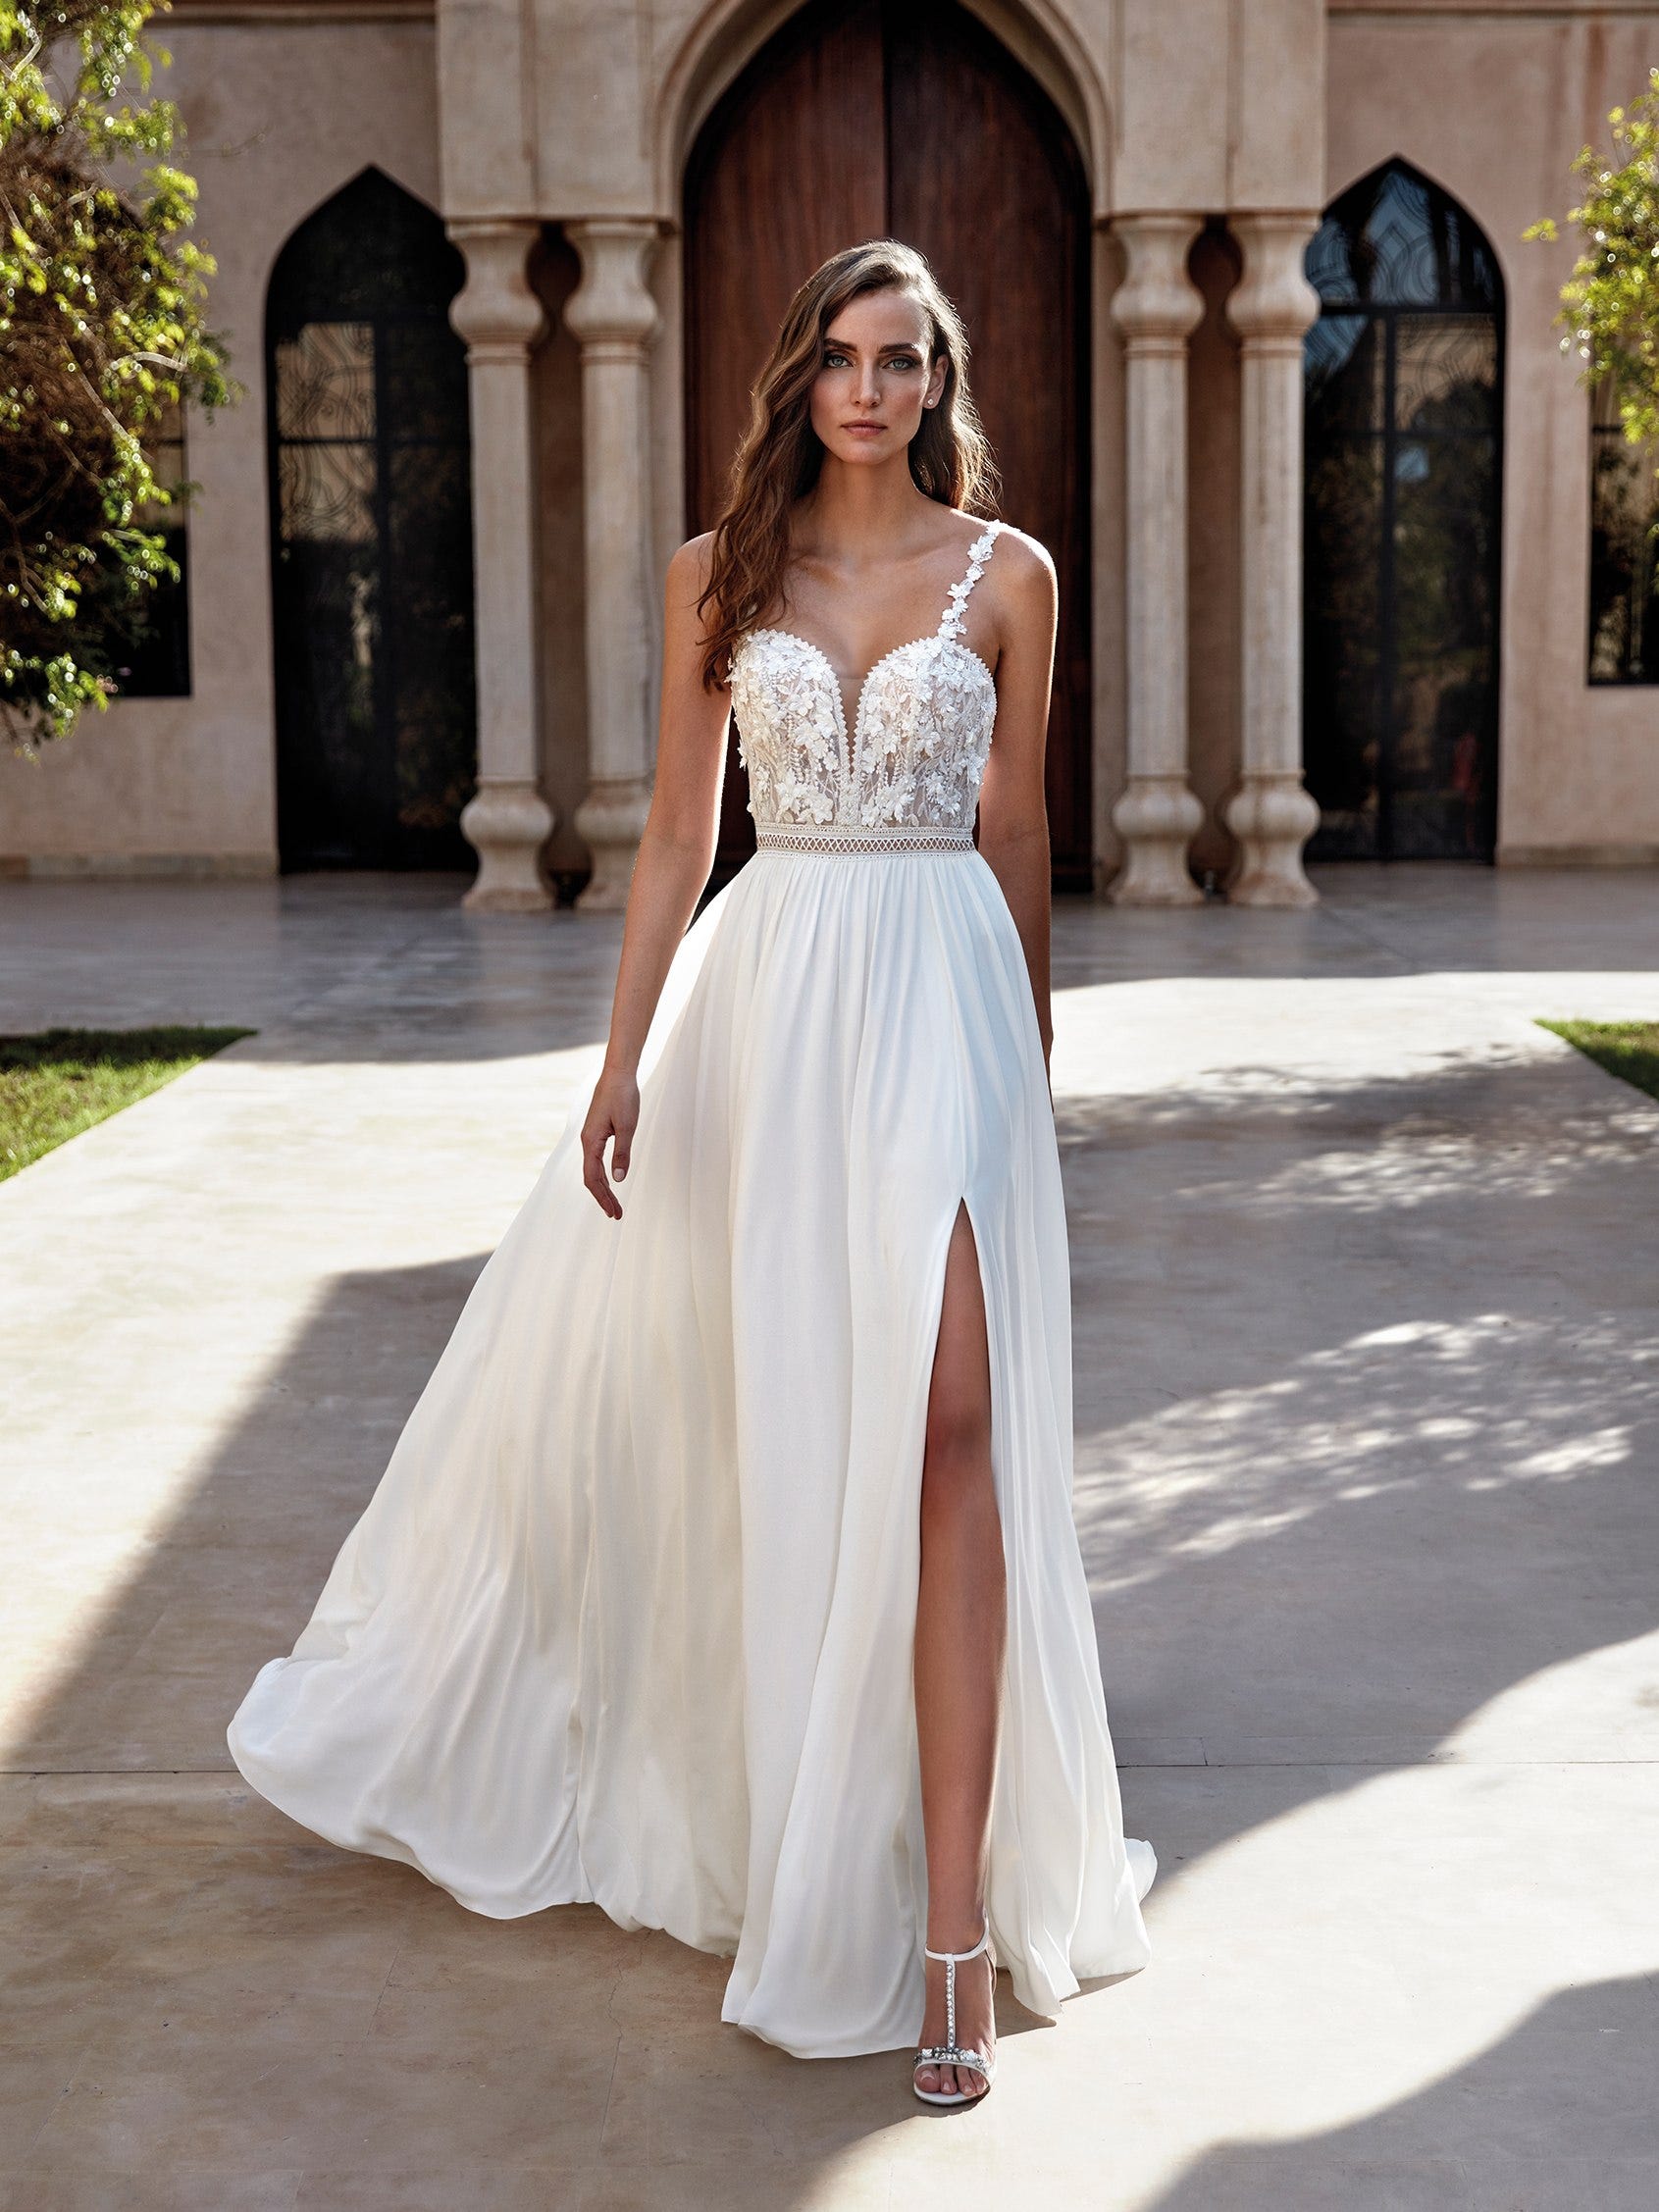 Buy SIQINZHENG Women's Sweetheart Full Lace Beach Wedding Dress Mermaid  Bridal Gown White at Amazon.in